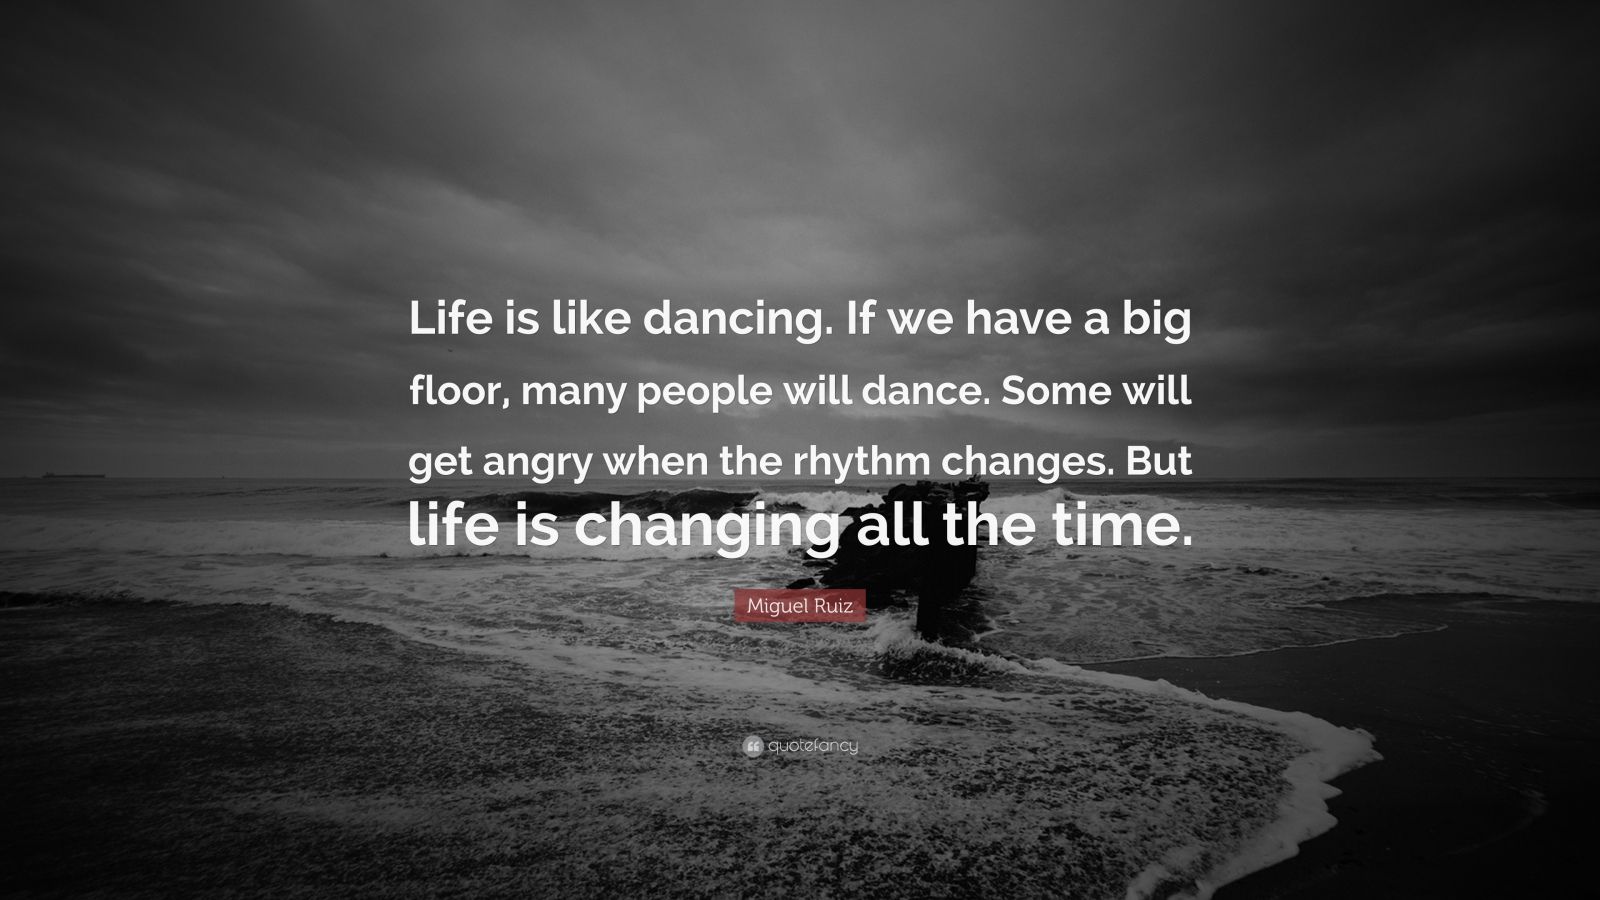 Miguel Ruiz Quote “Life is like dancing If we have a big floor